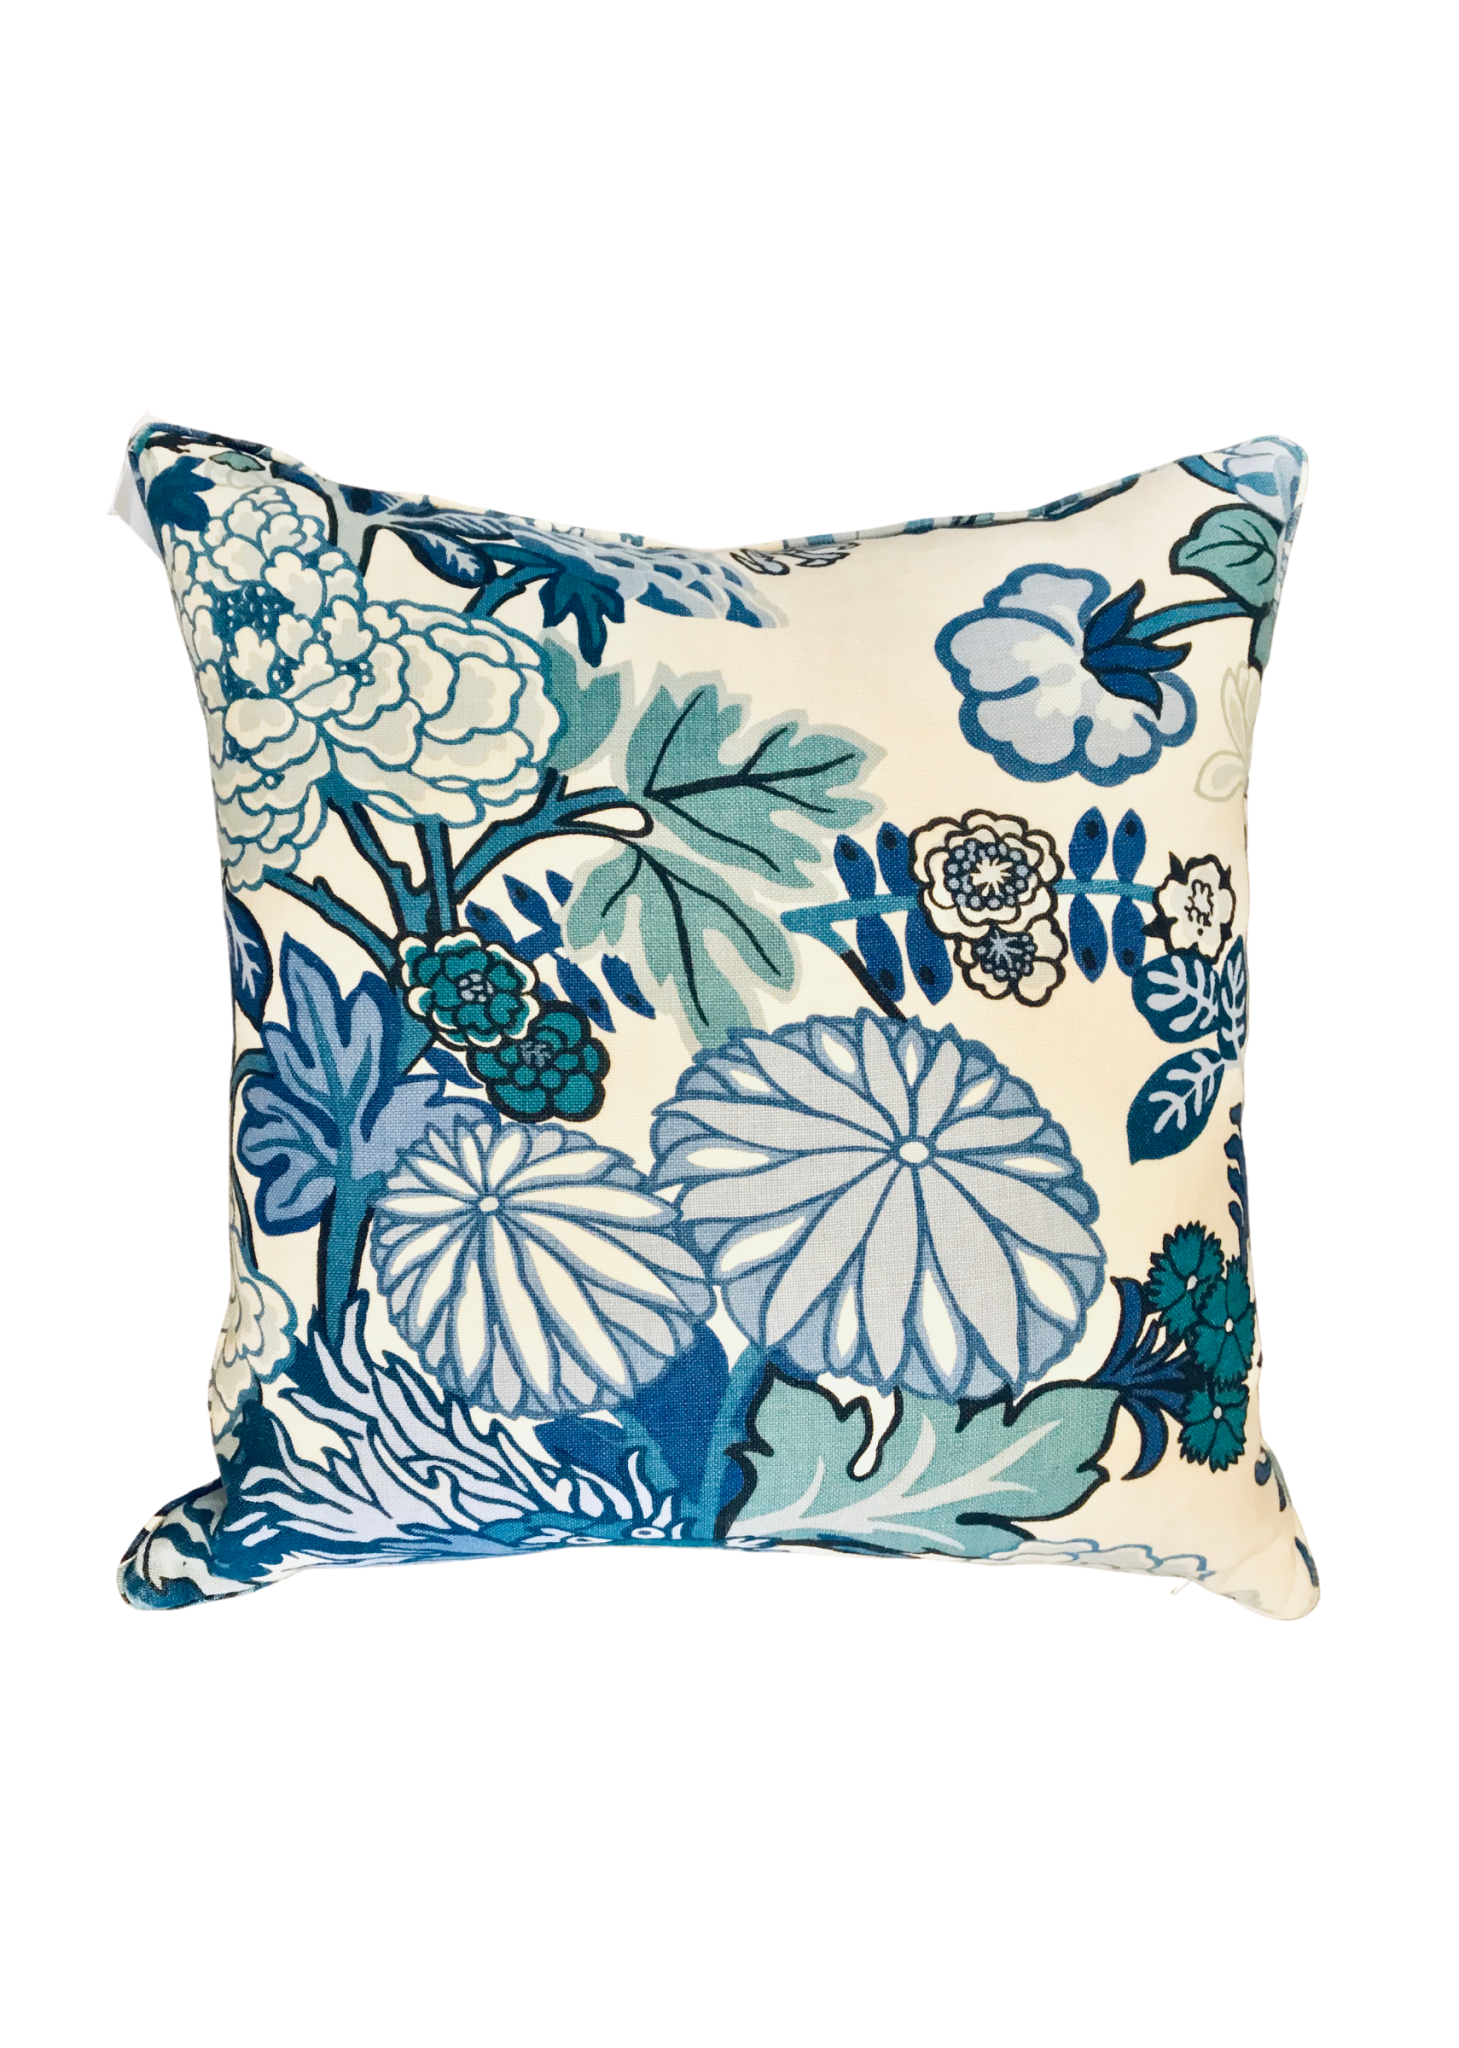 teal floral cushions